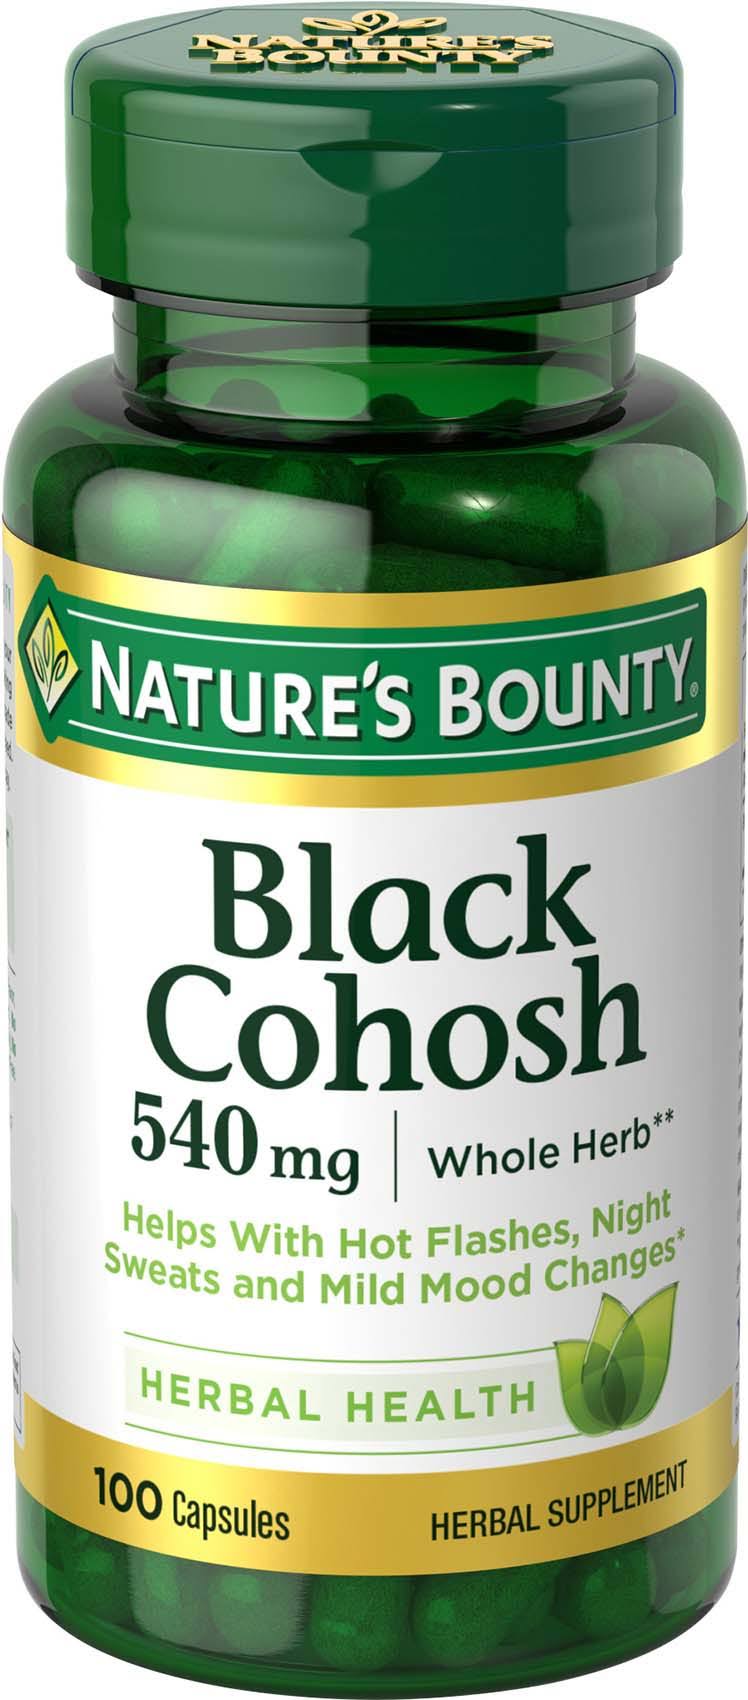 Nature's Bounty Black Cohosh Capsules - 100 Pack